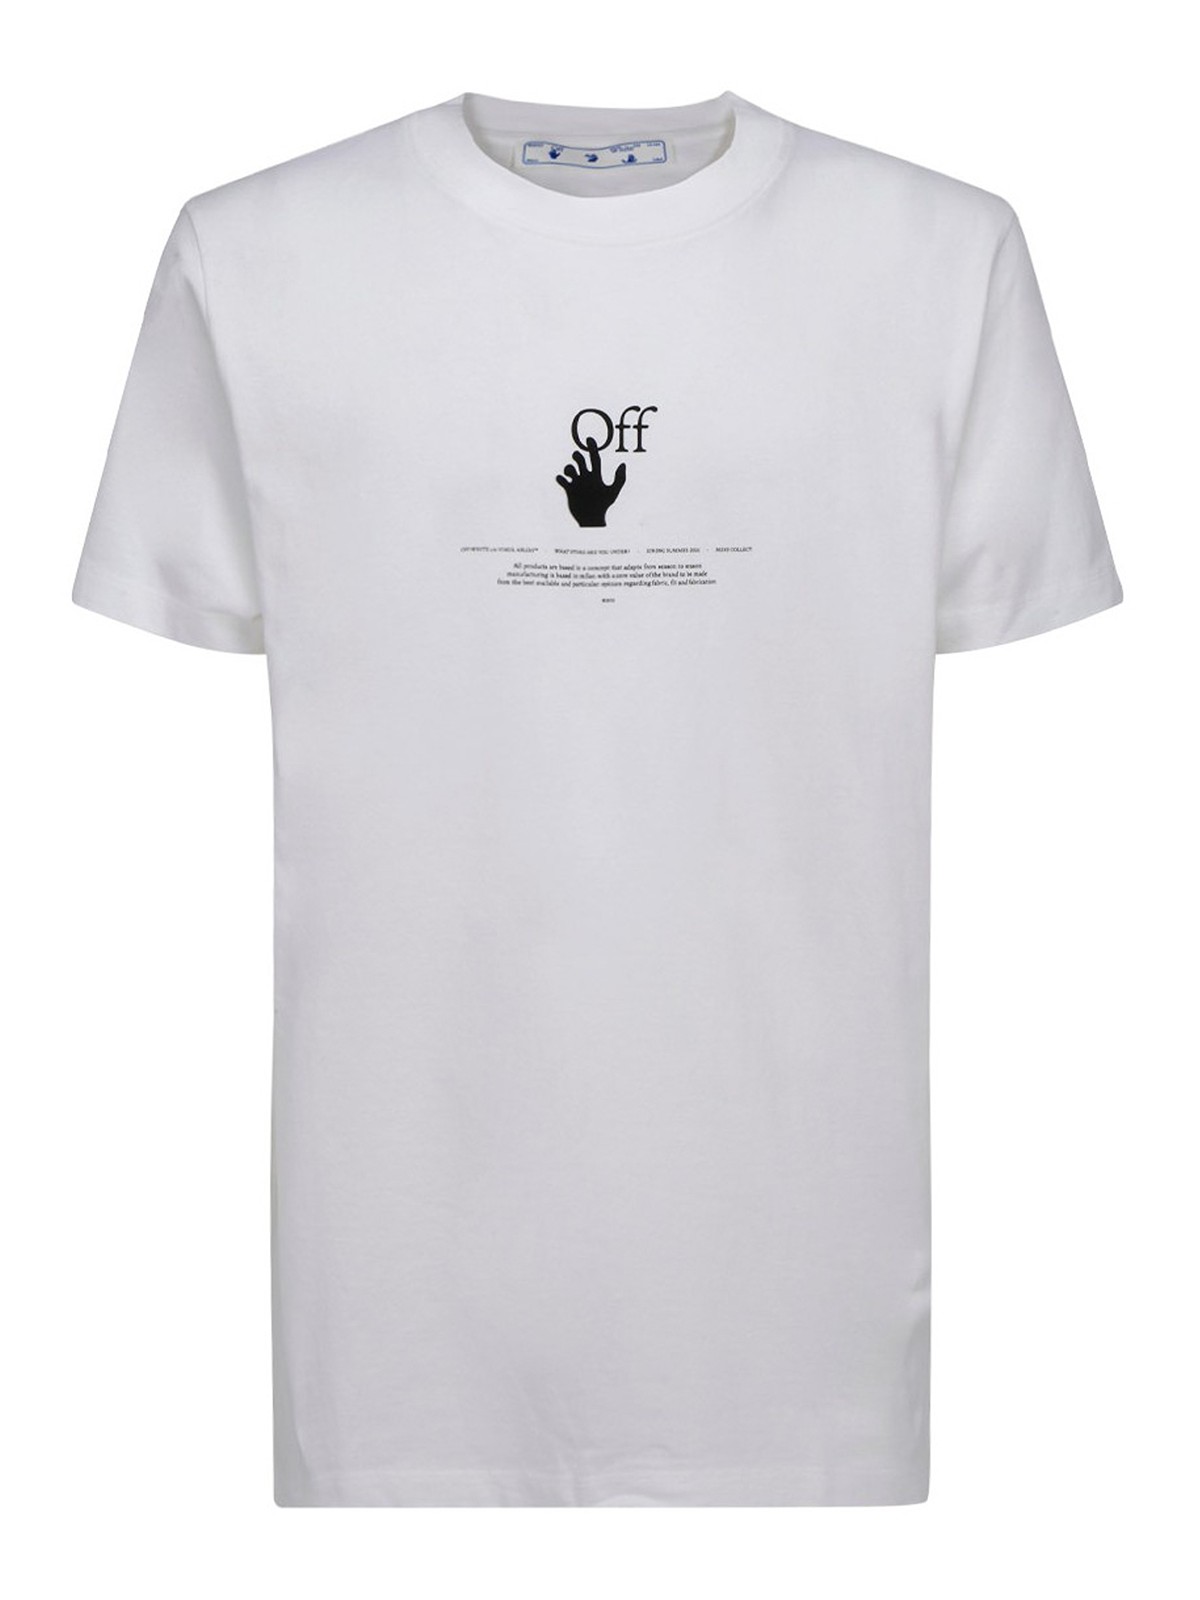 T-shirts Off-White - Graffiti T-shirt - OMAA027R21JER0080141 | iKRIX.com